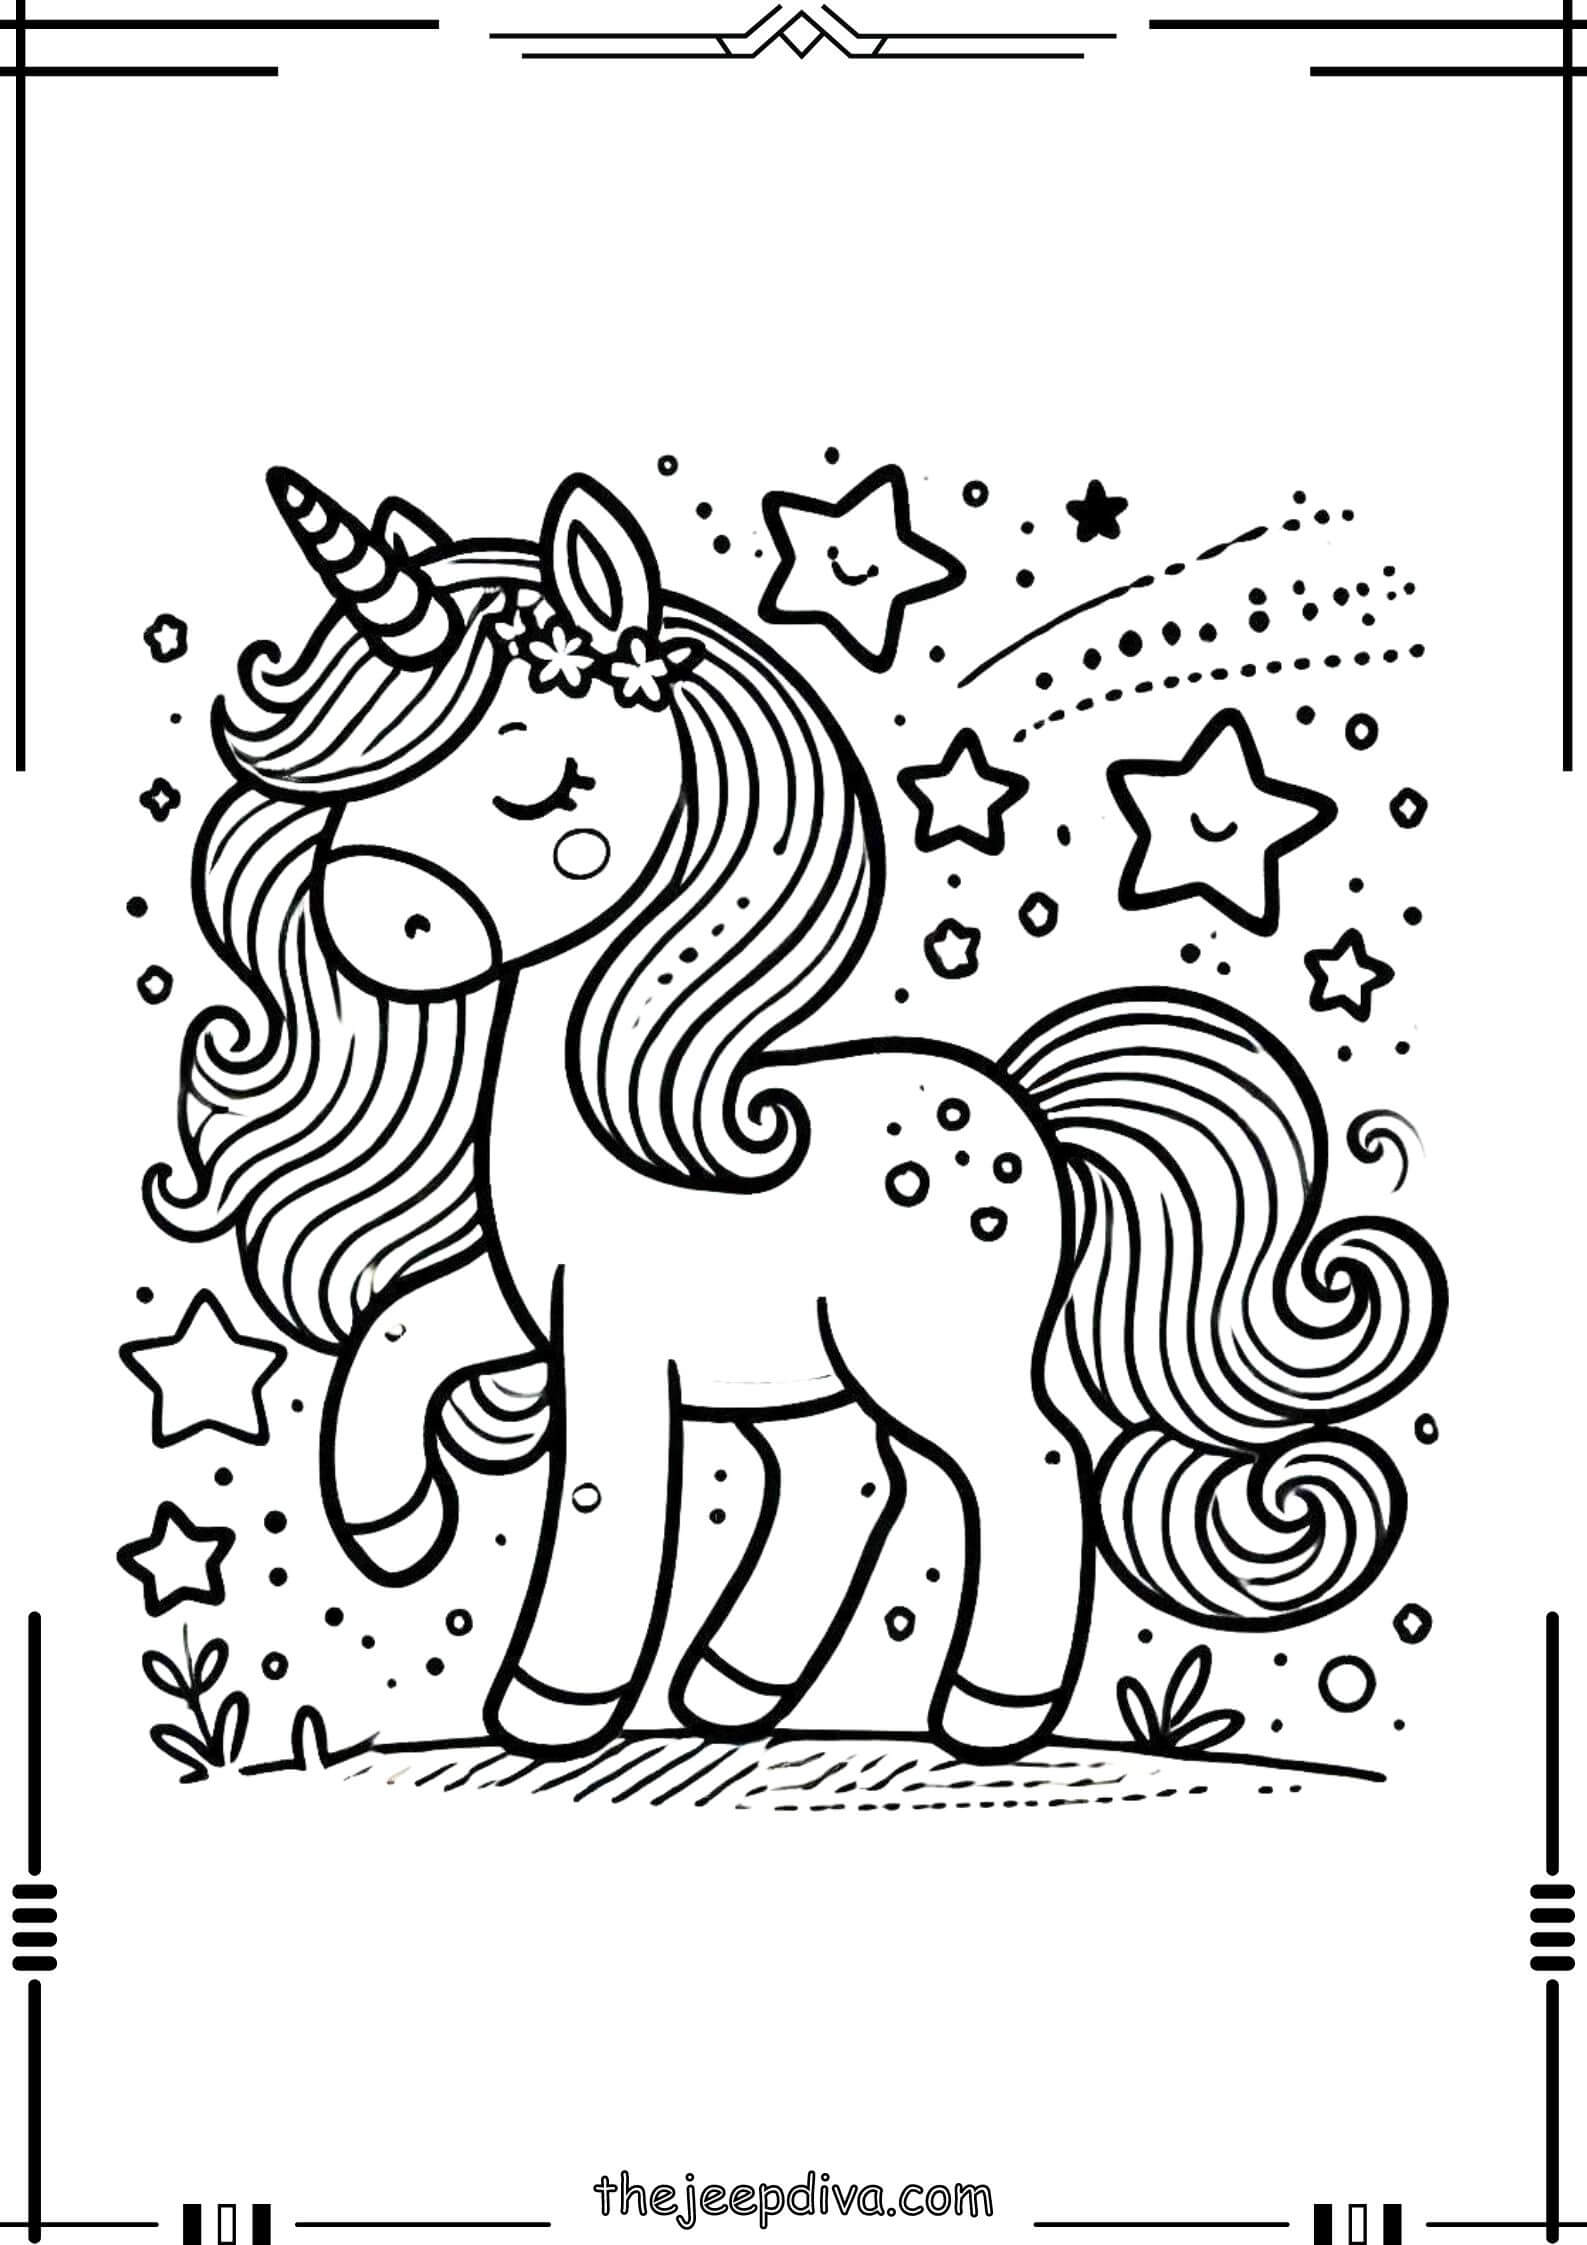 unicorn-coloring-page-medium-8